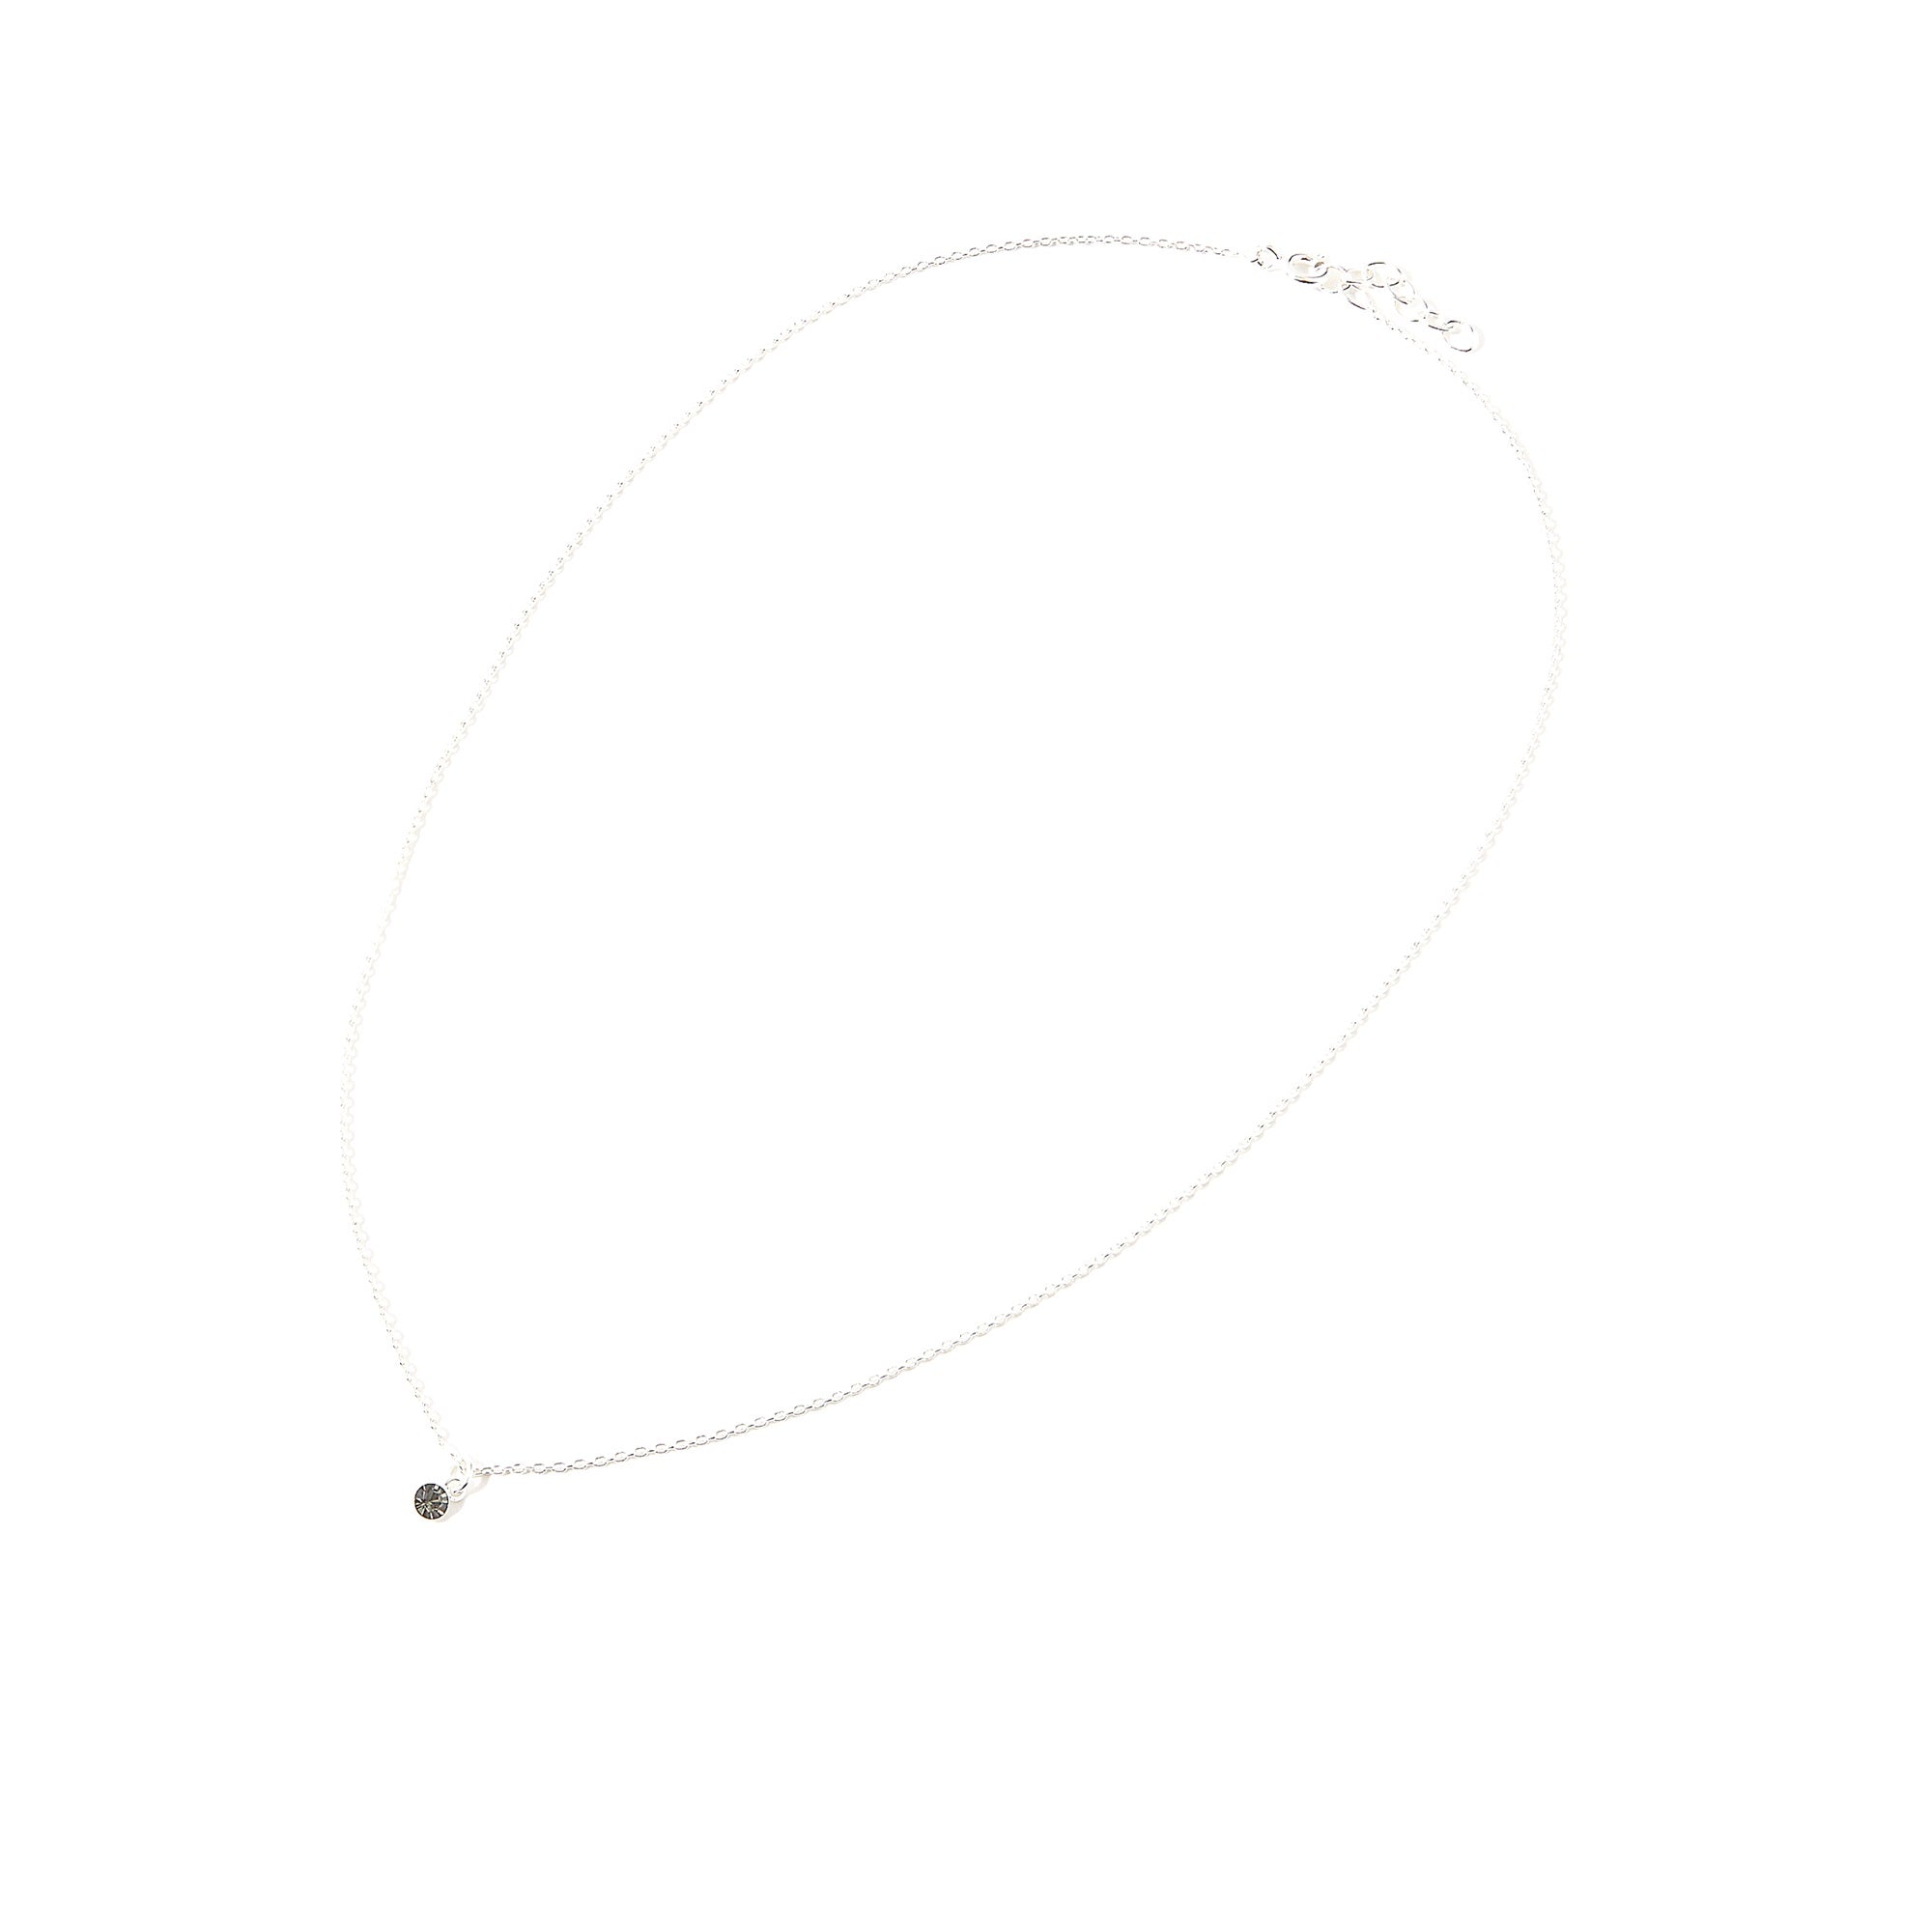 925 Pure Sterling Silver Swarovski Black Crystal Pendant Necklace For Women